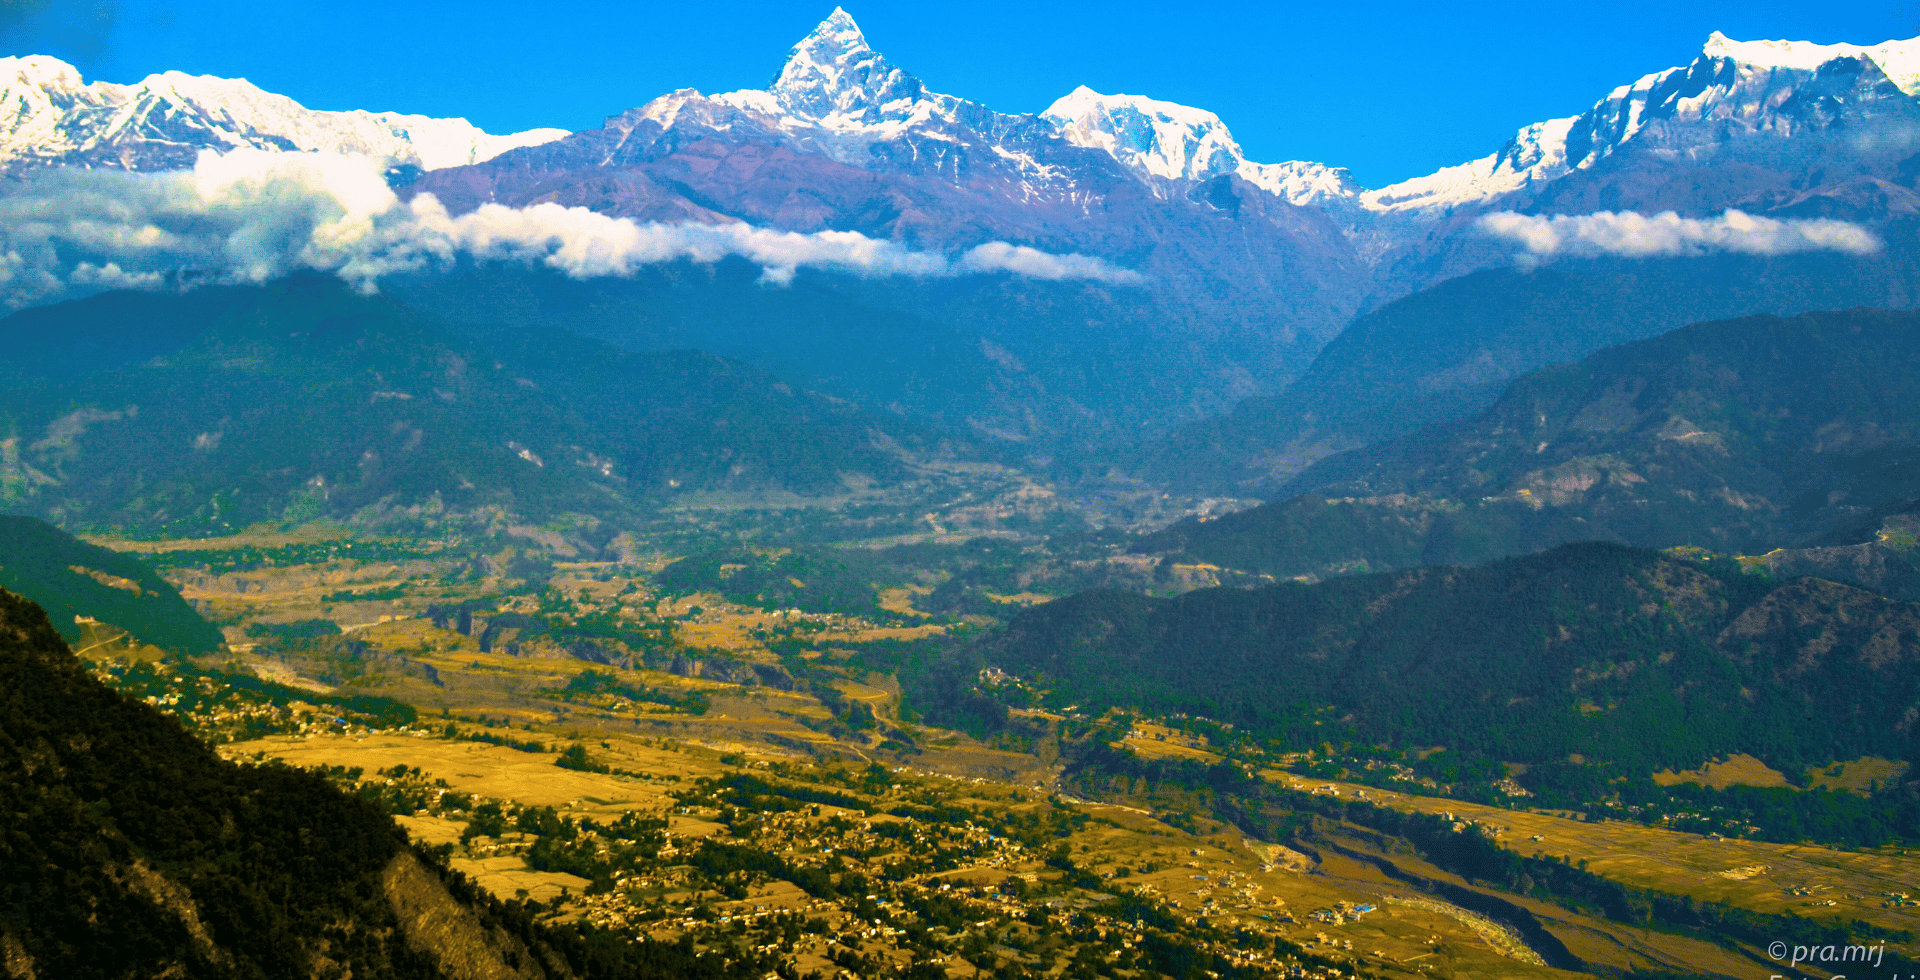 scene from sarangkot, pokhara, nepal